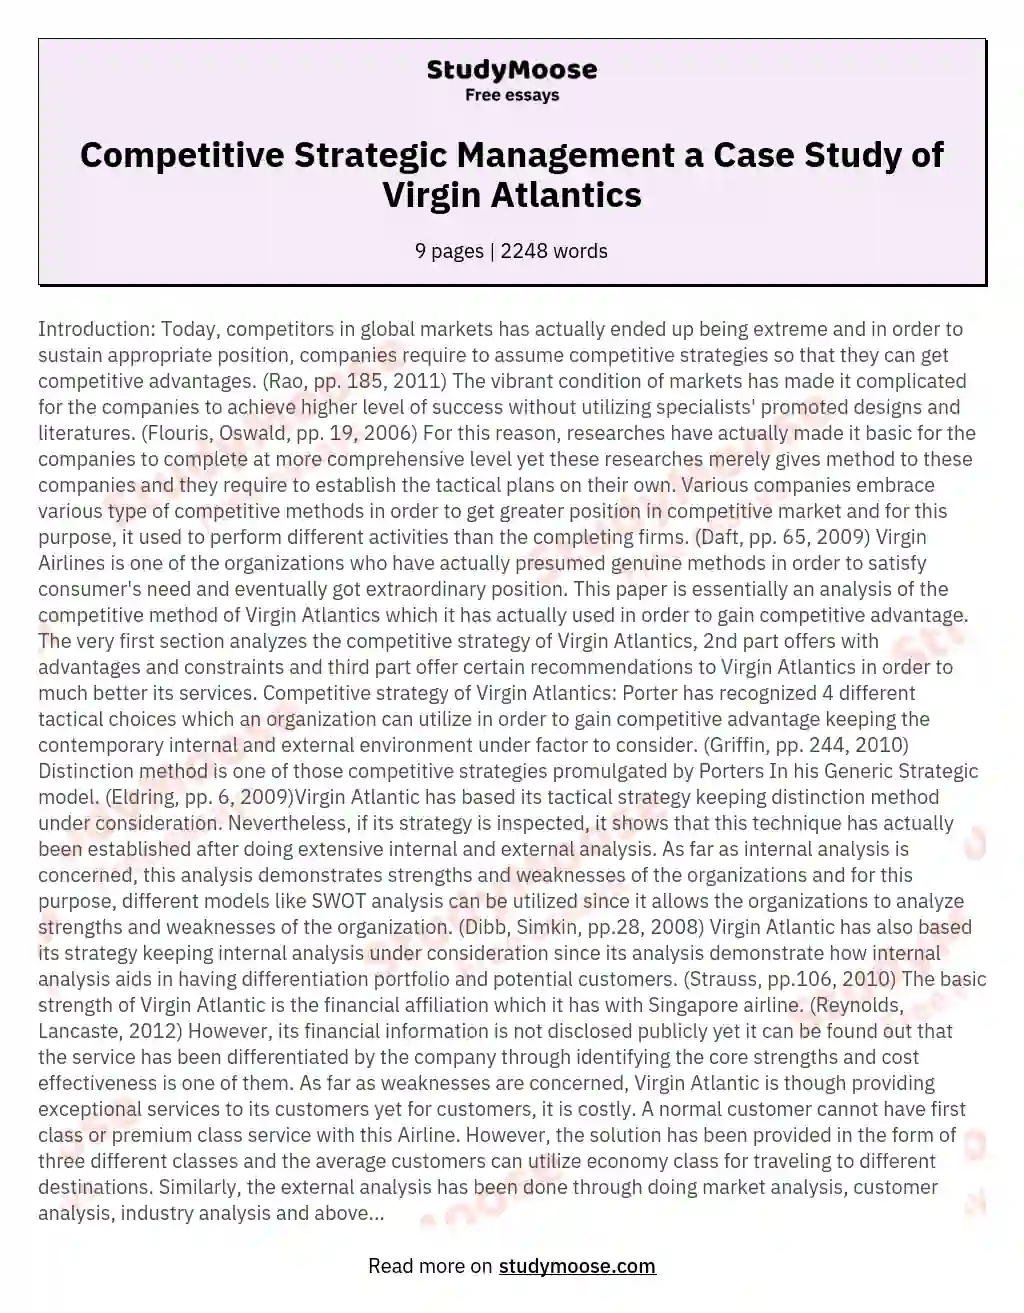 virgin atlantic competitor analysis